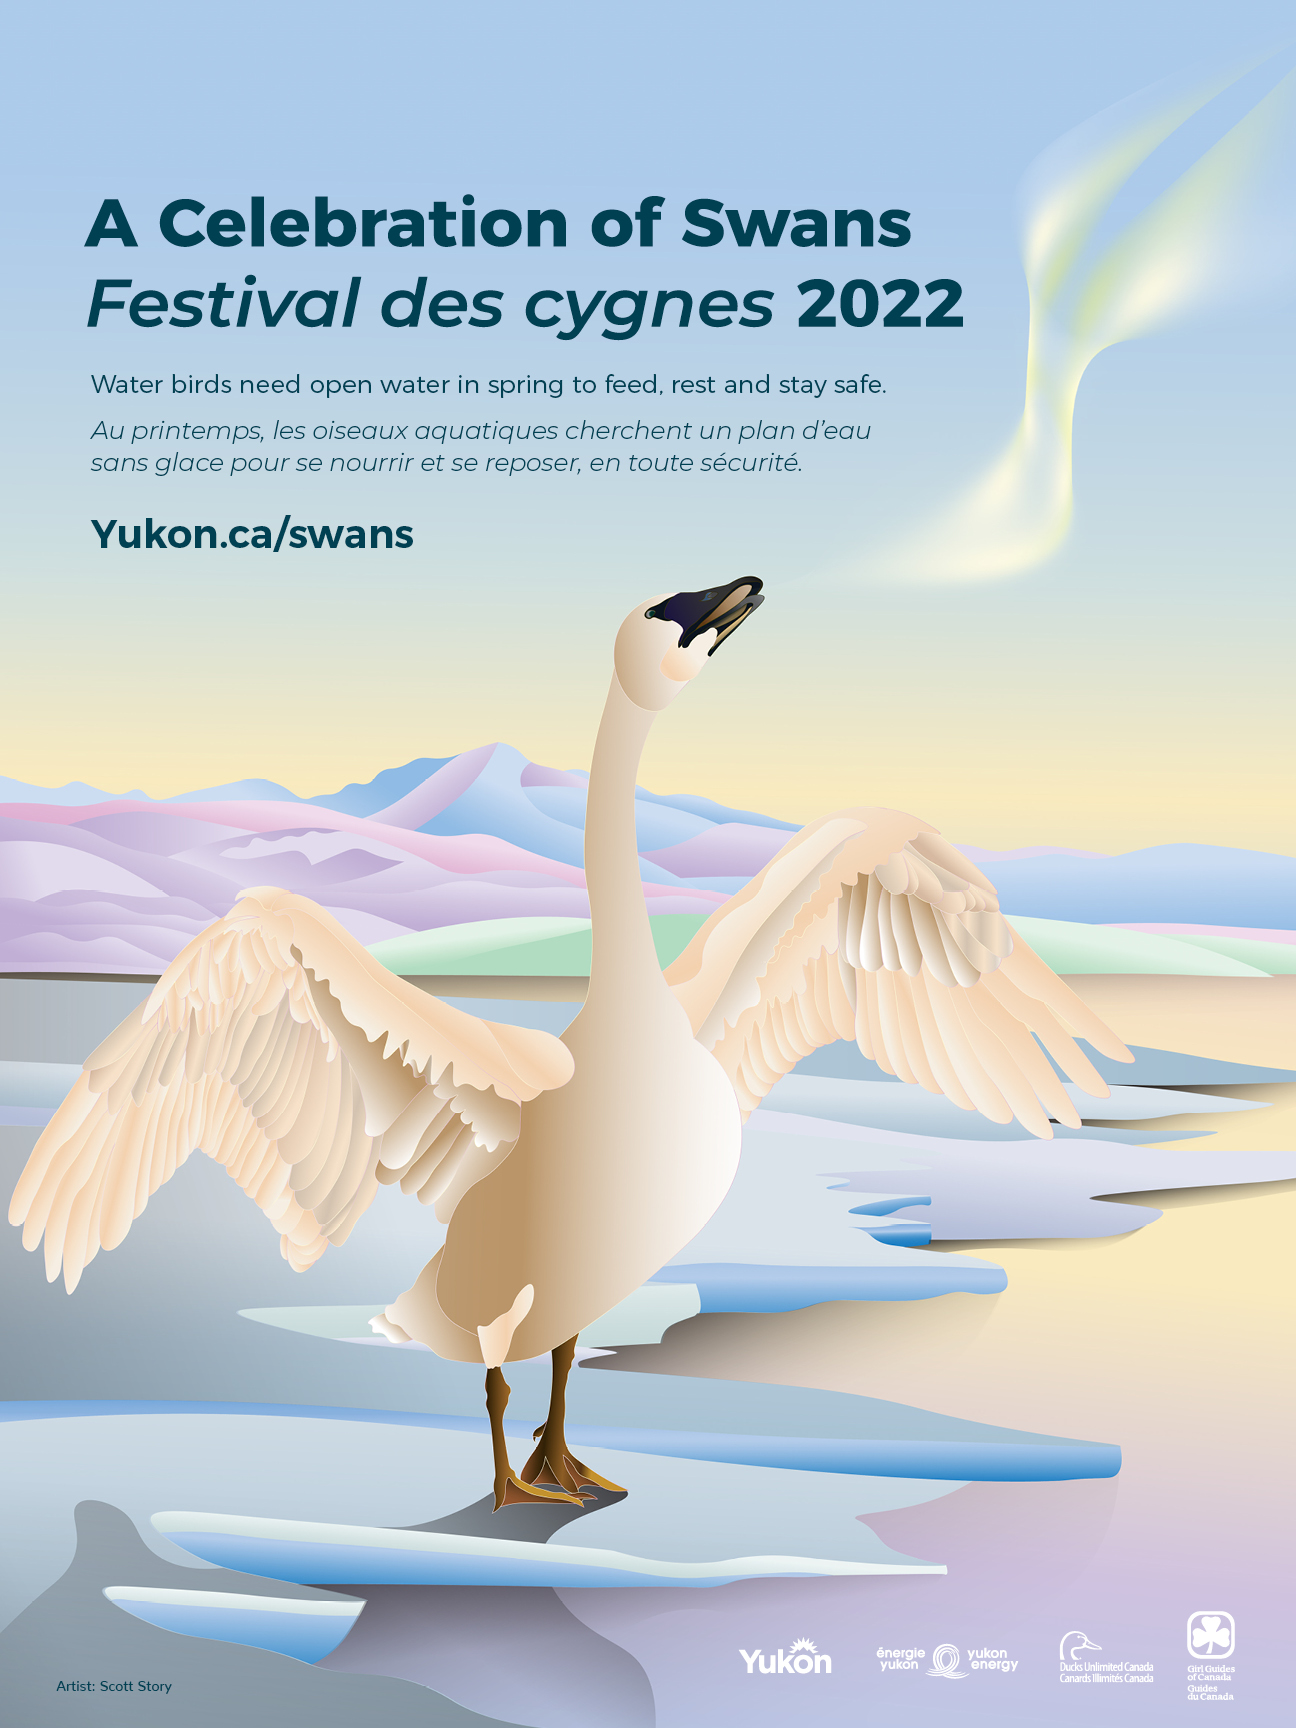 Festival des cygnes 2022